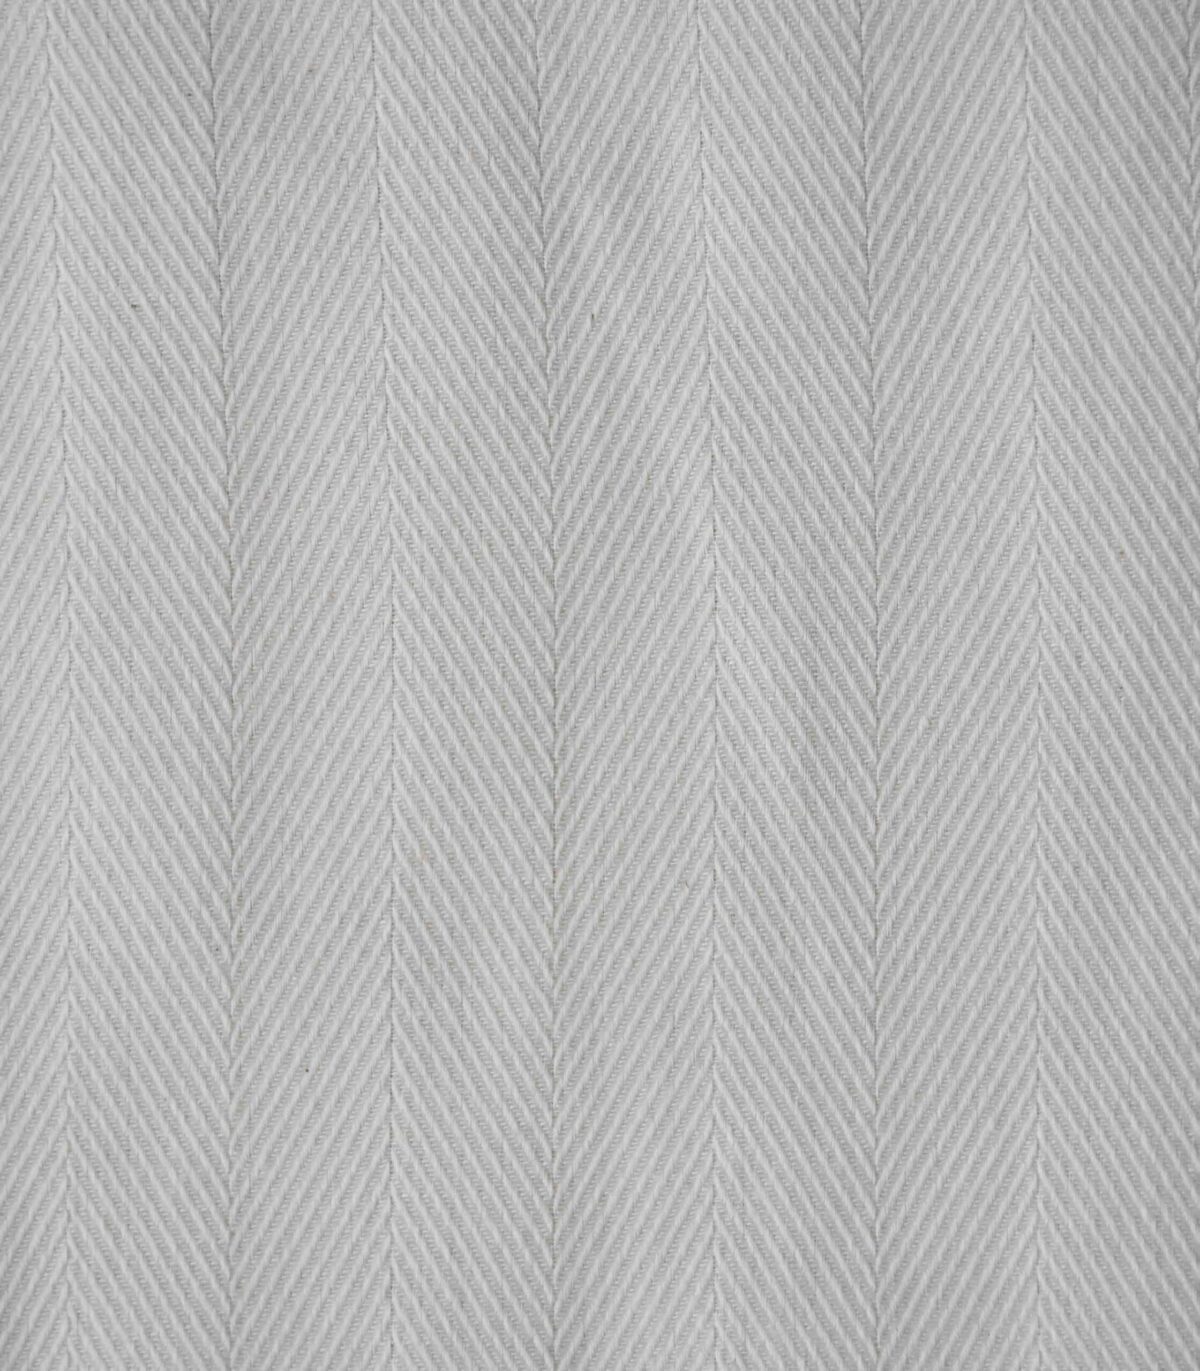 Poly Cotton RFD Herring Bone Fabric